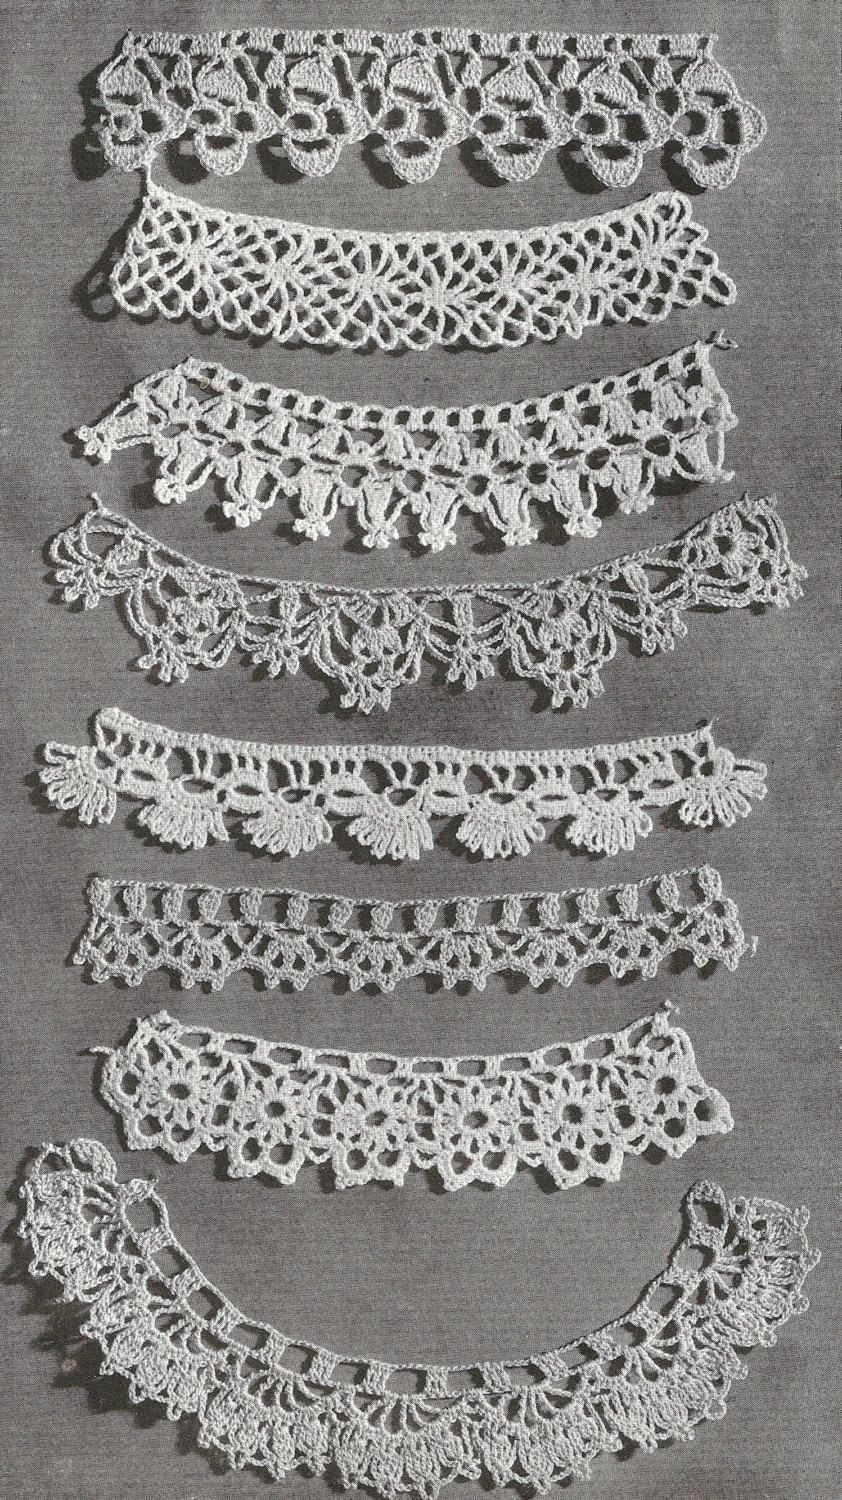 Crochet Lace Patterns 1940 Lace Edgings Vintage Crochet Pattern Dantel Pinterest